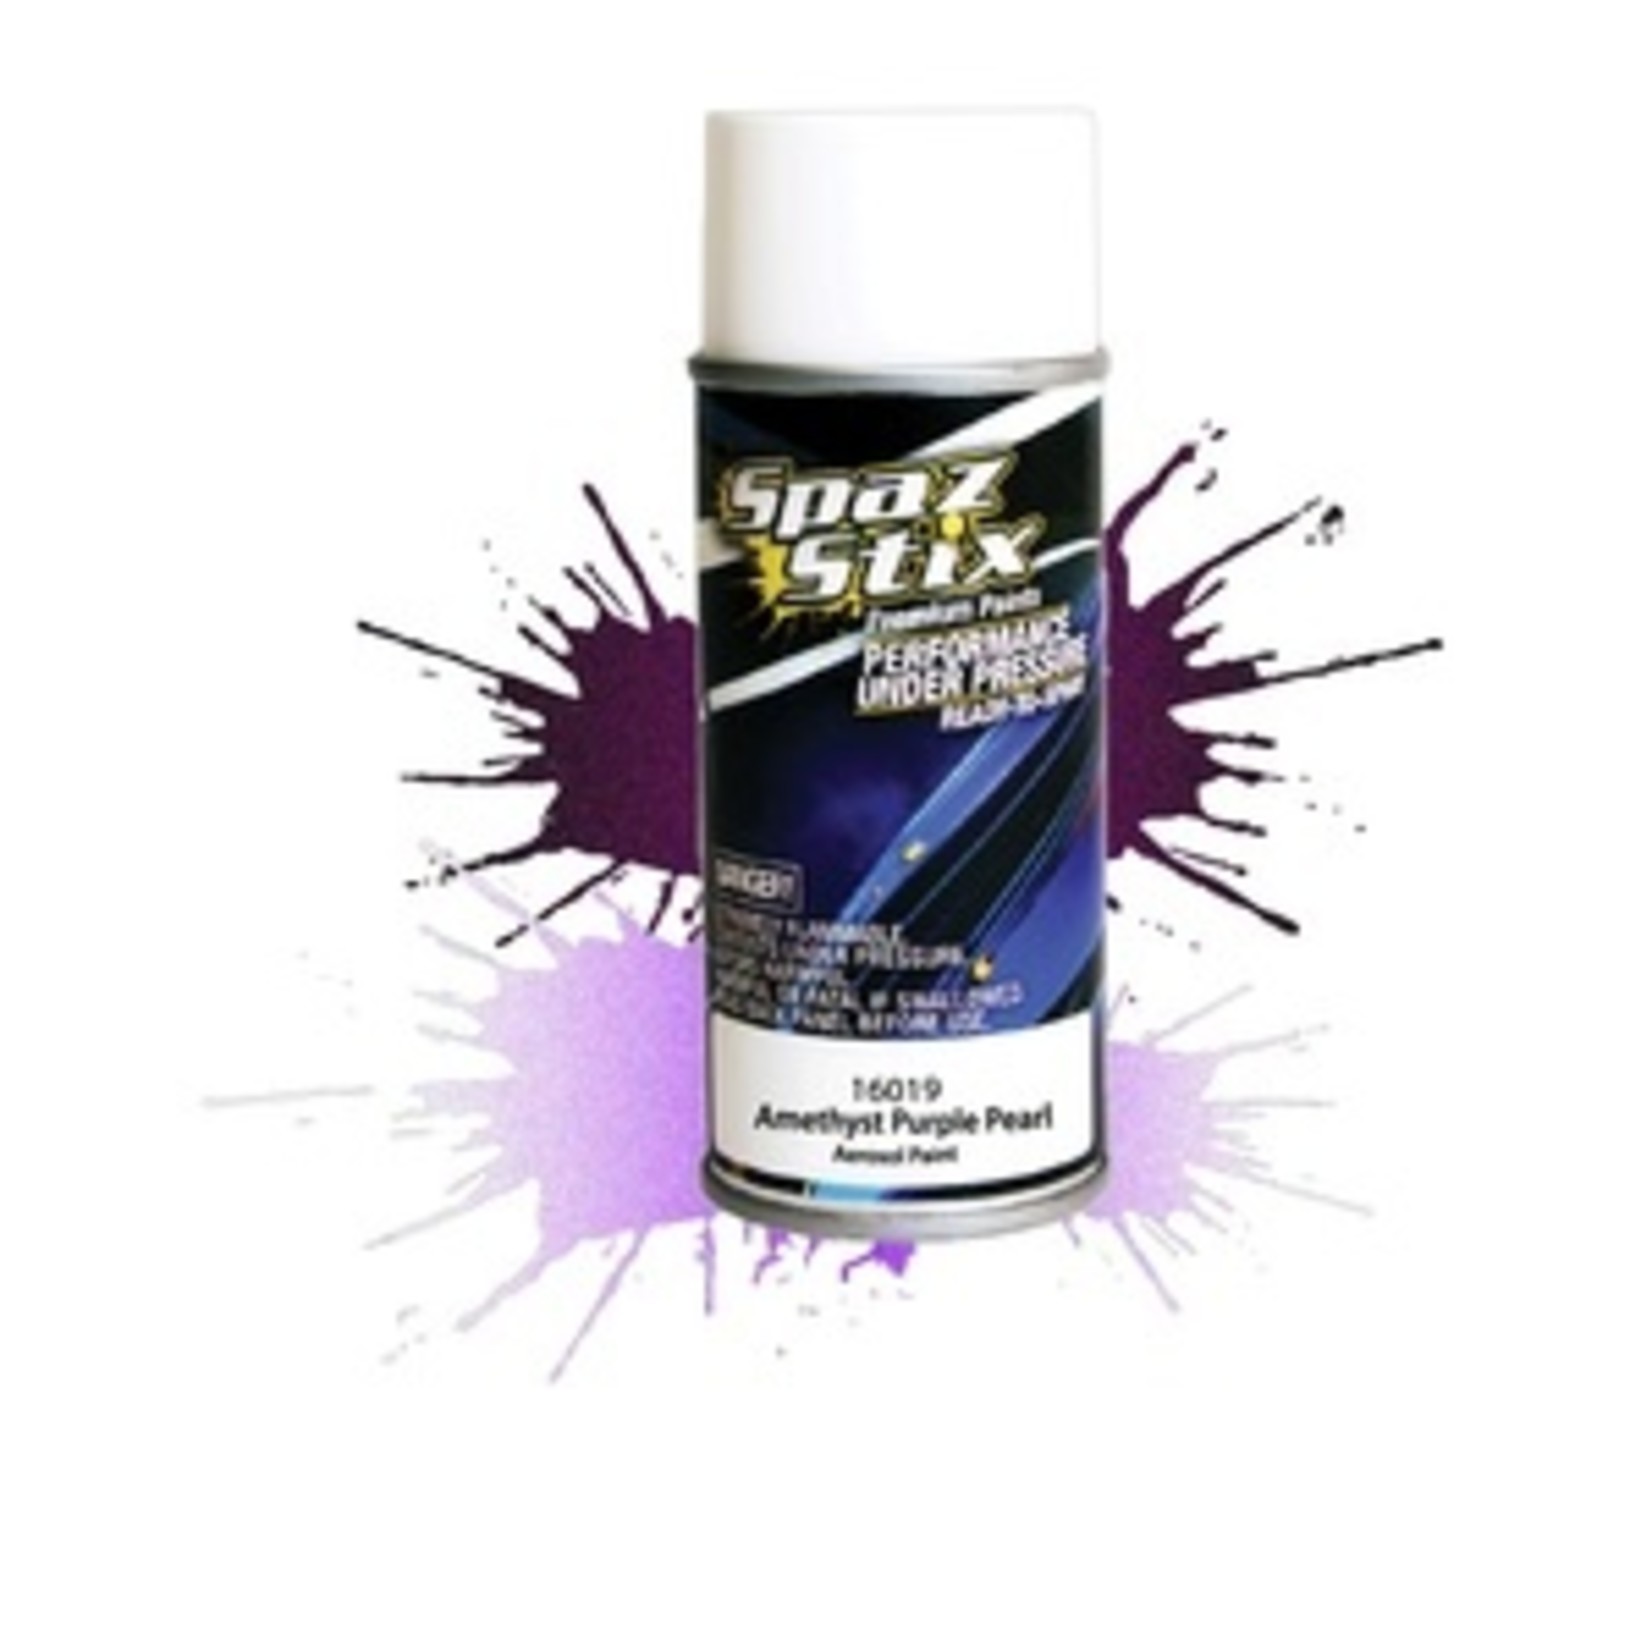 Spaz Stix SZX16019  Amethyst Purple Pearl Aerosol Paint, 3.5oz Can